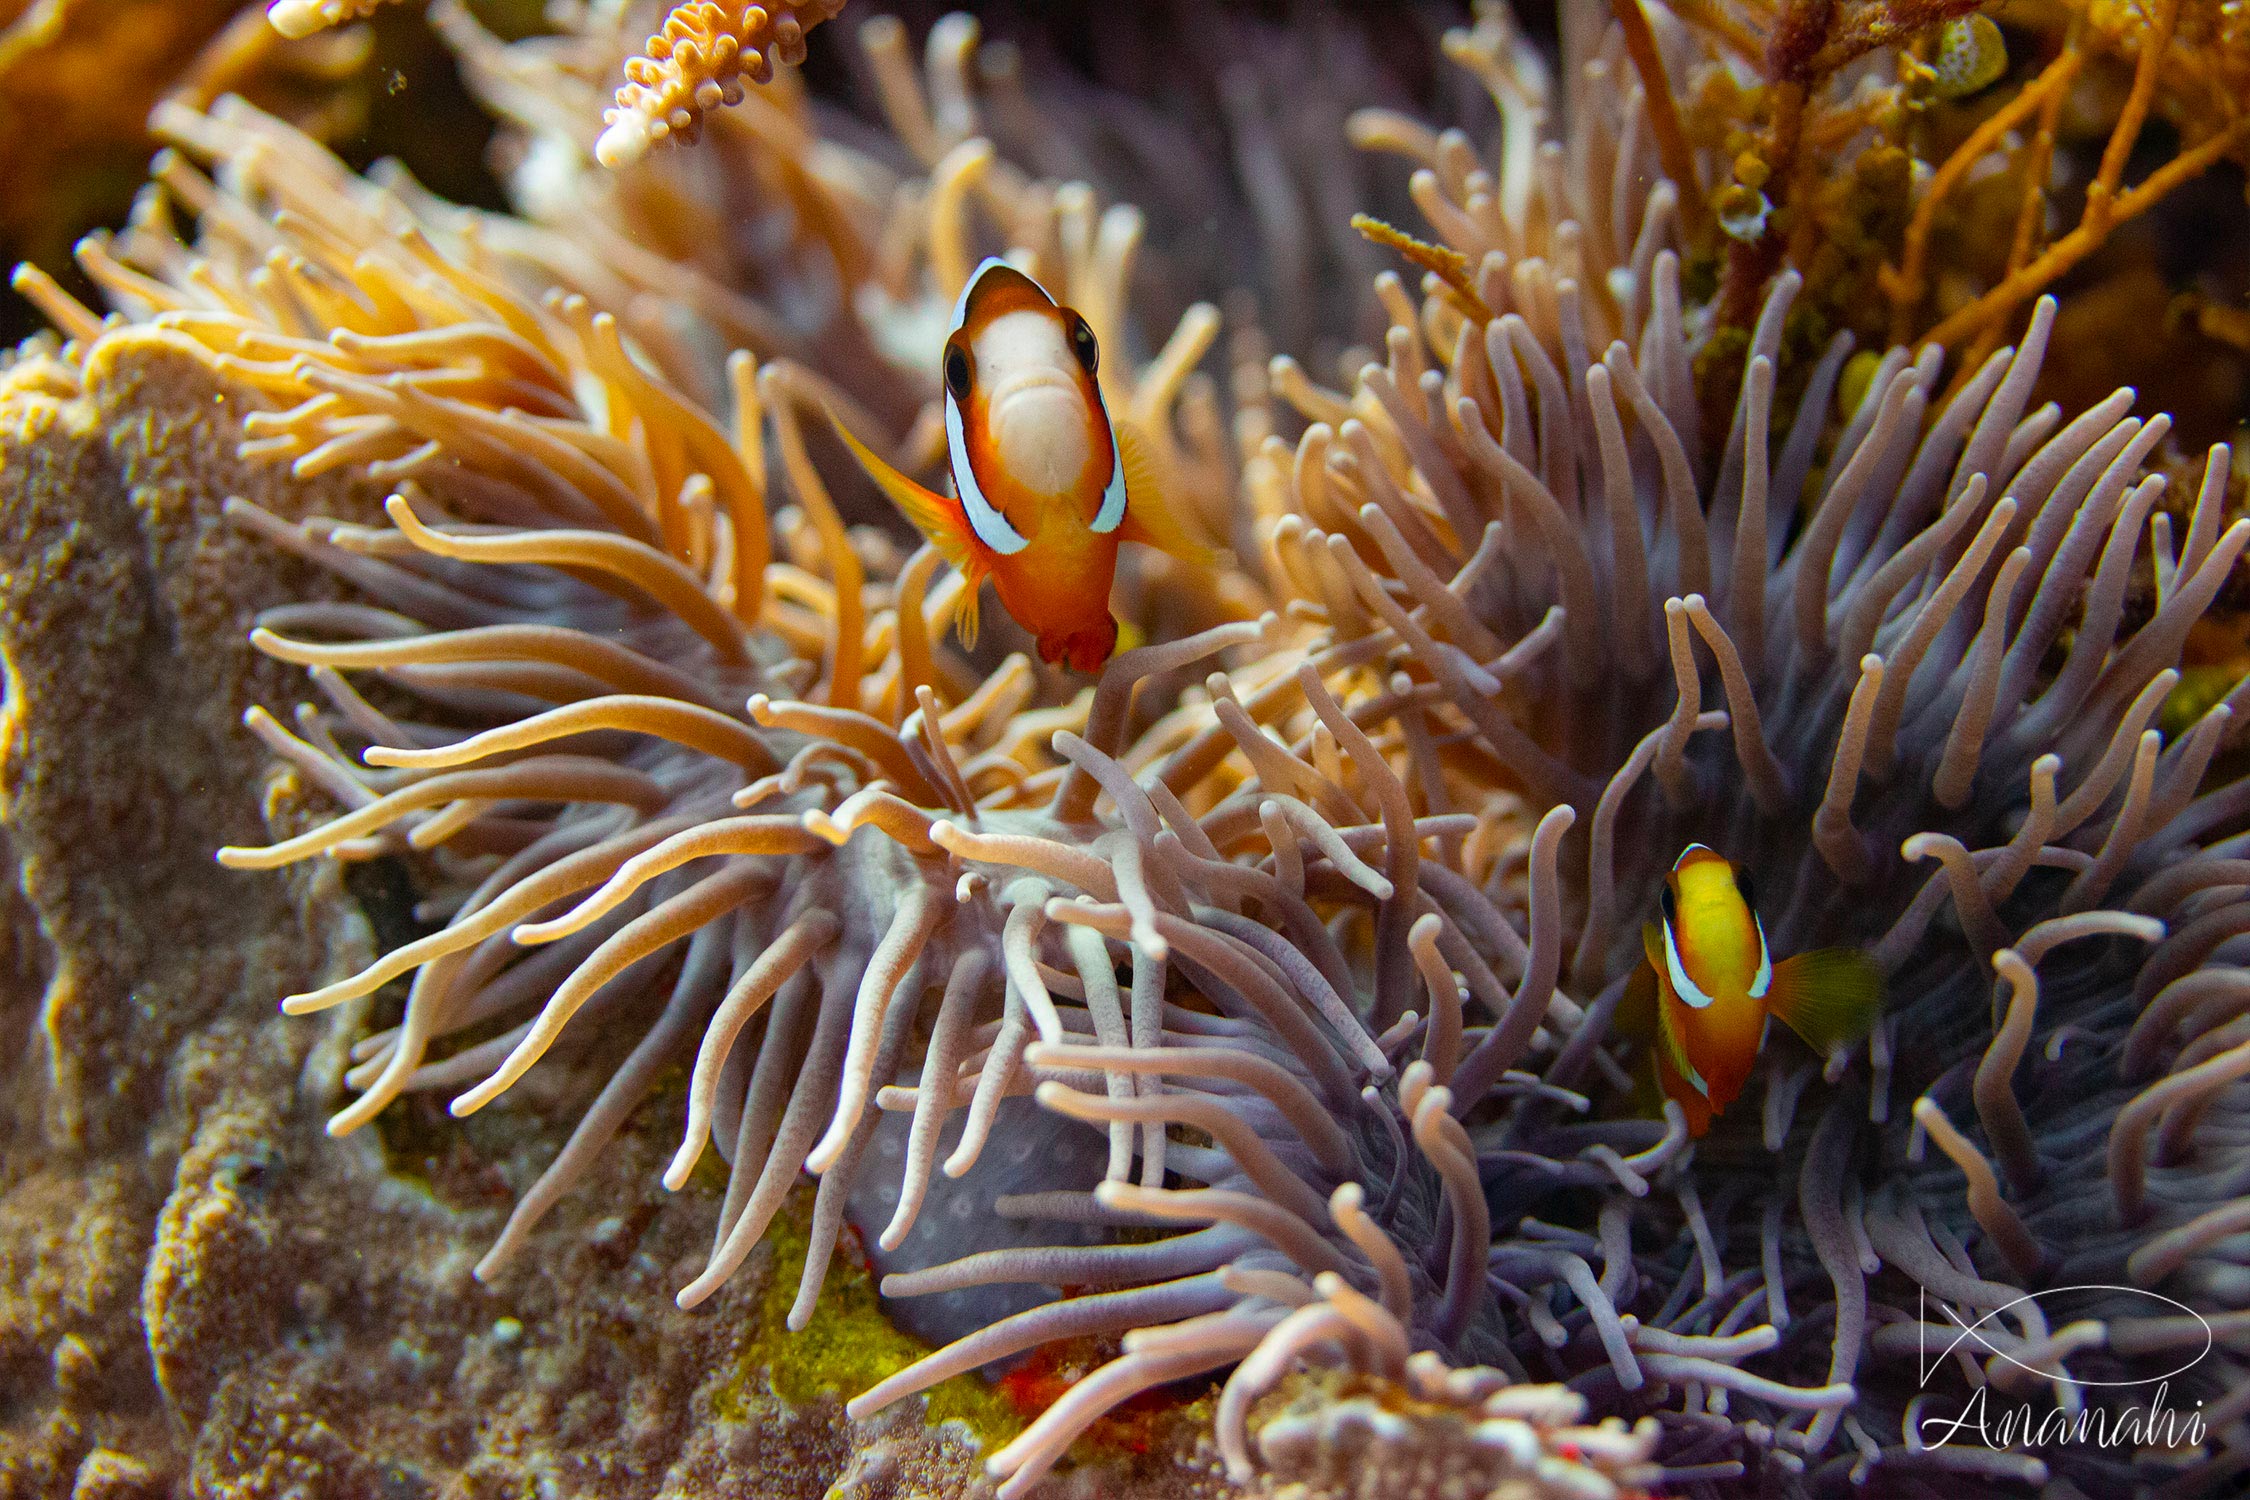 Ocellaris clownfish of Raja Ampat